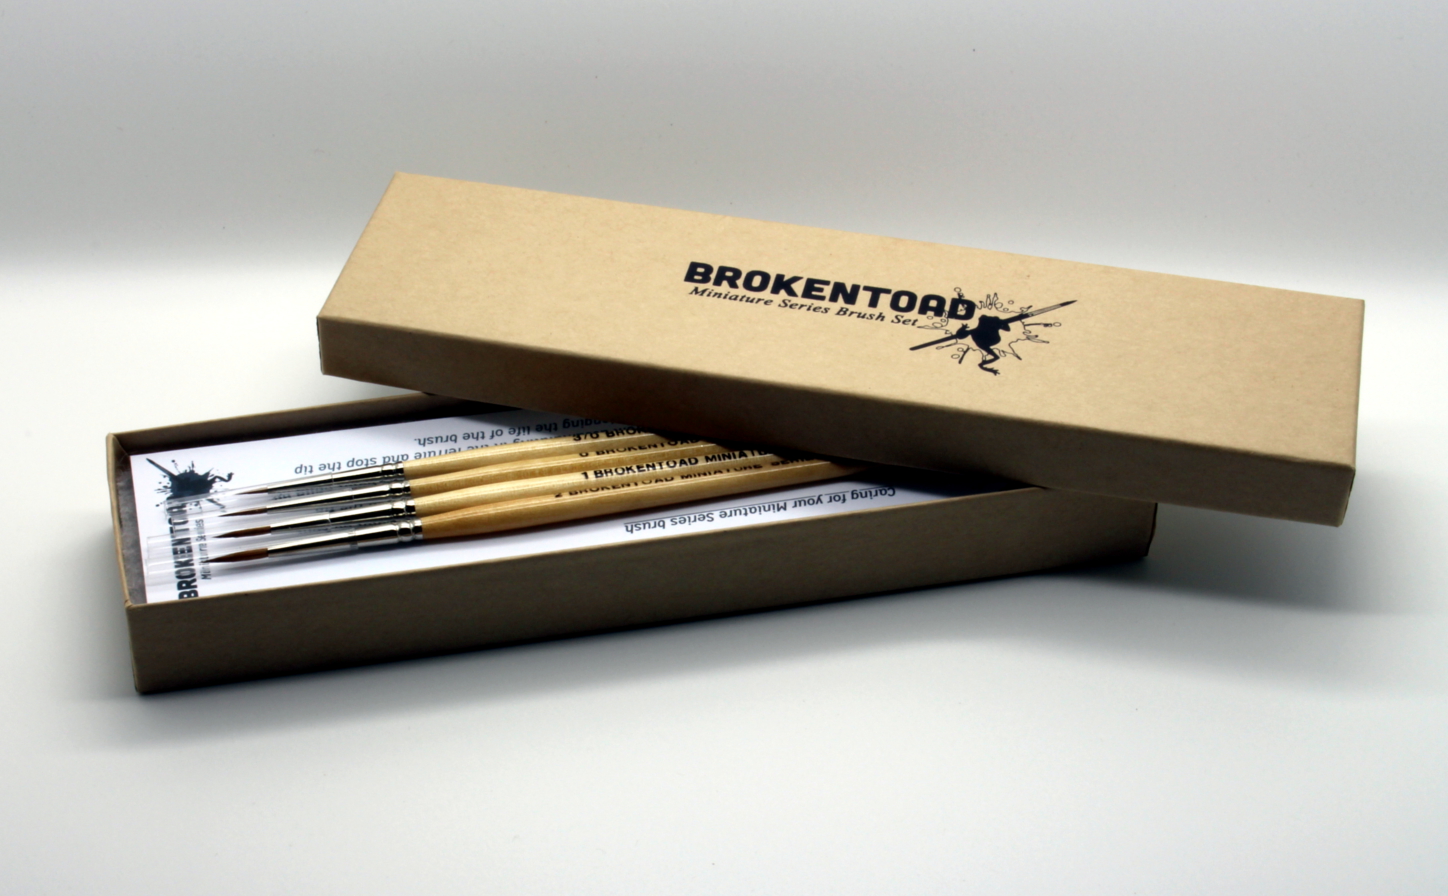 BrokenToad Miniature Series brush sets